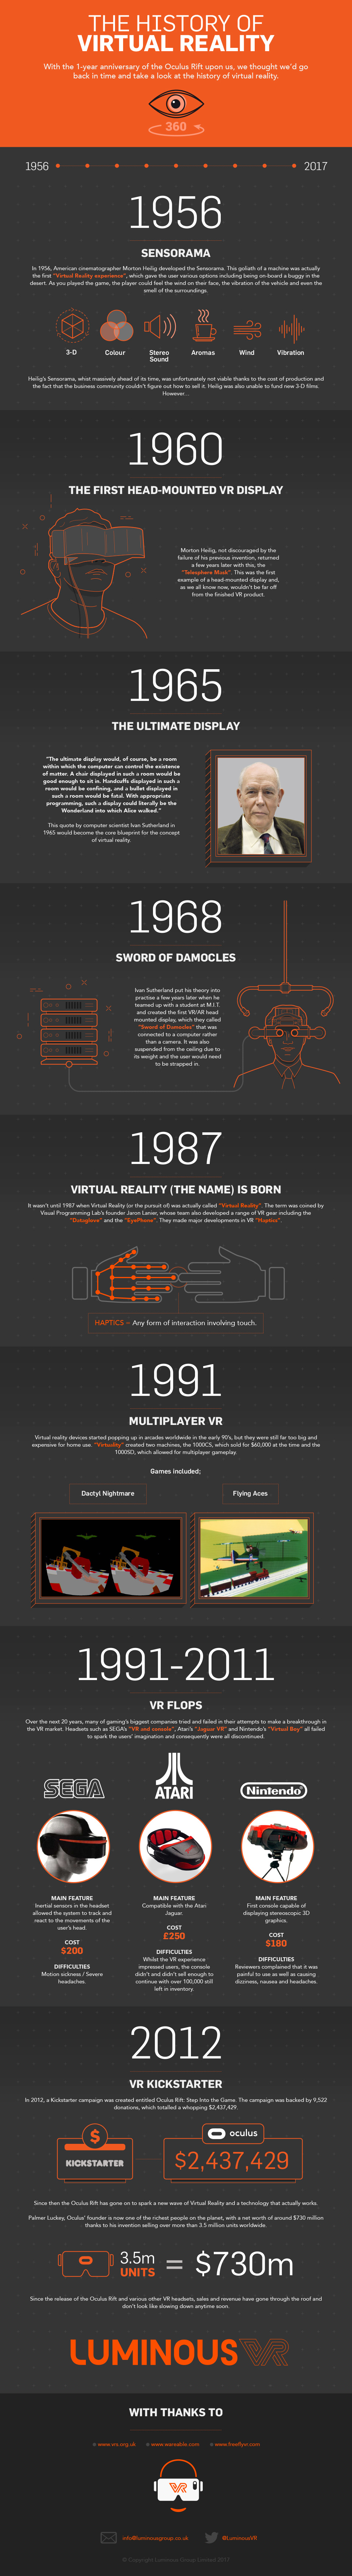 Luminous Infographic VR